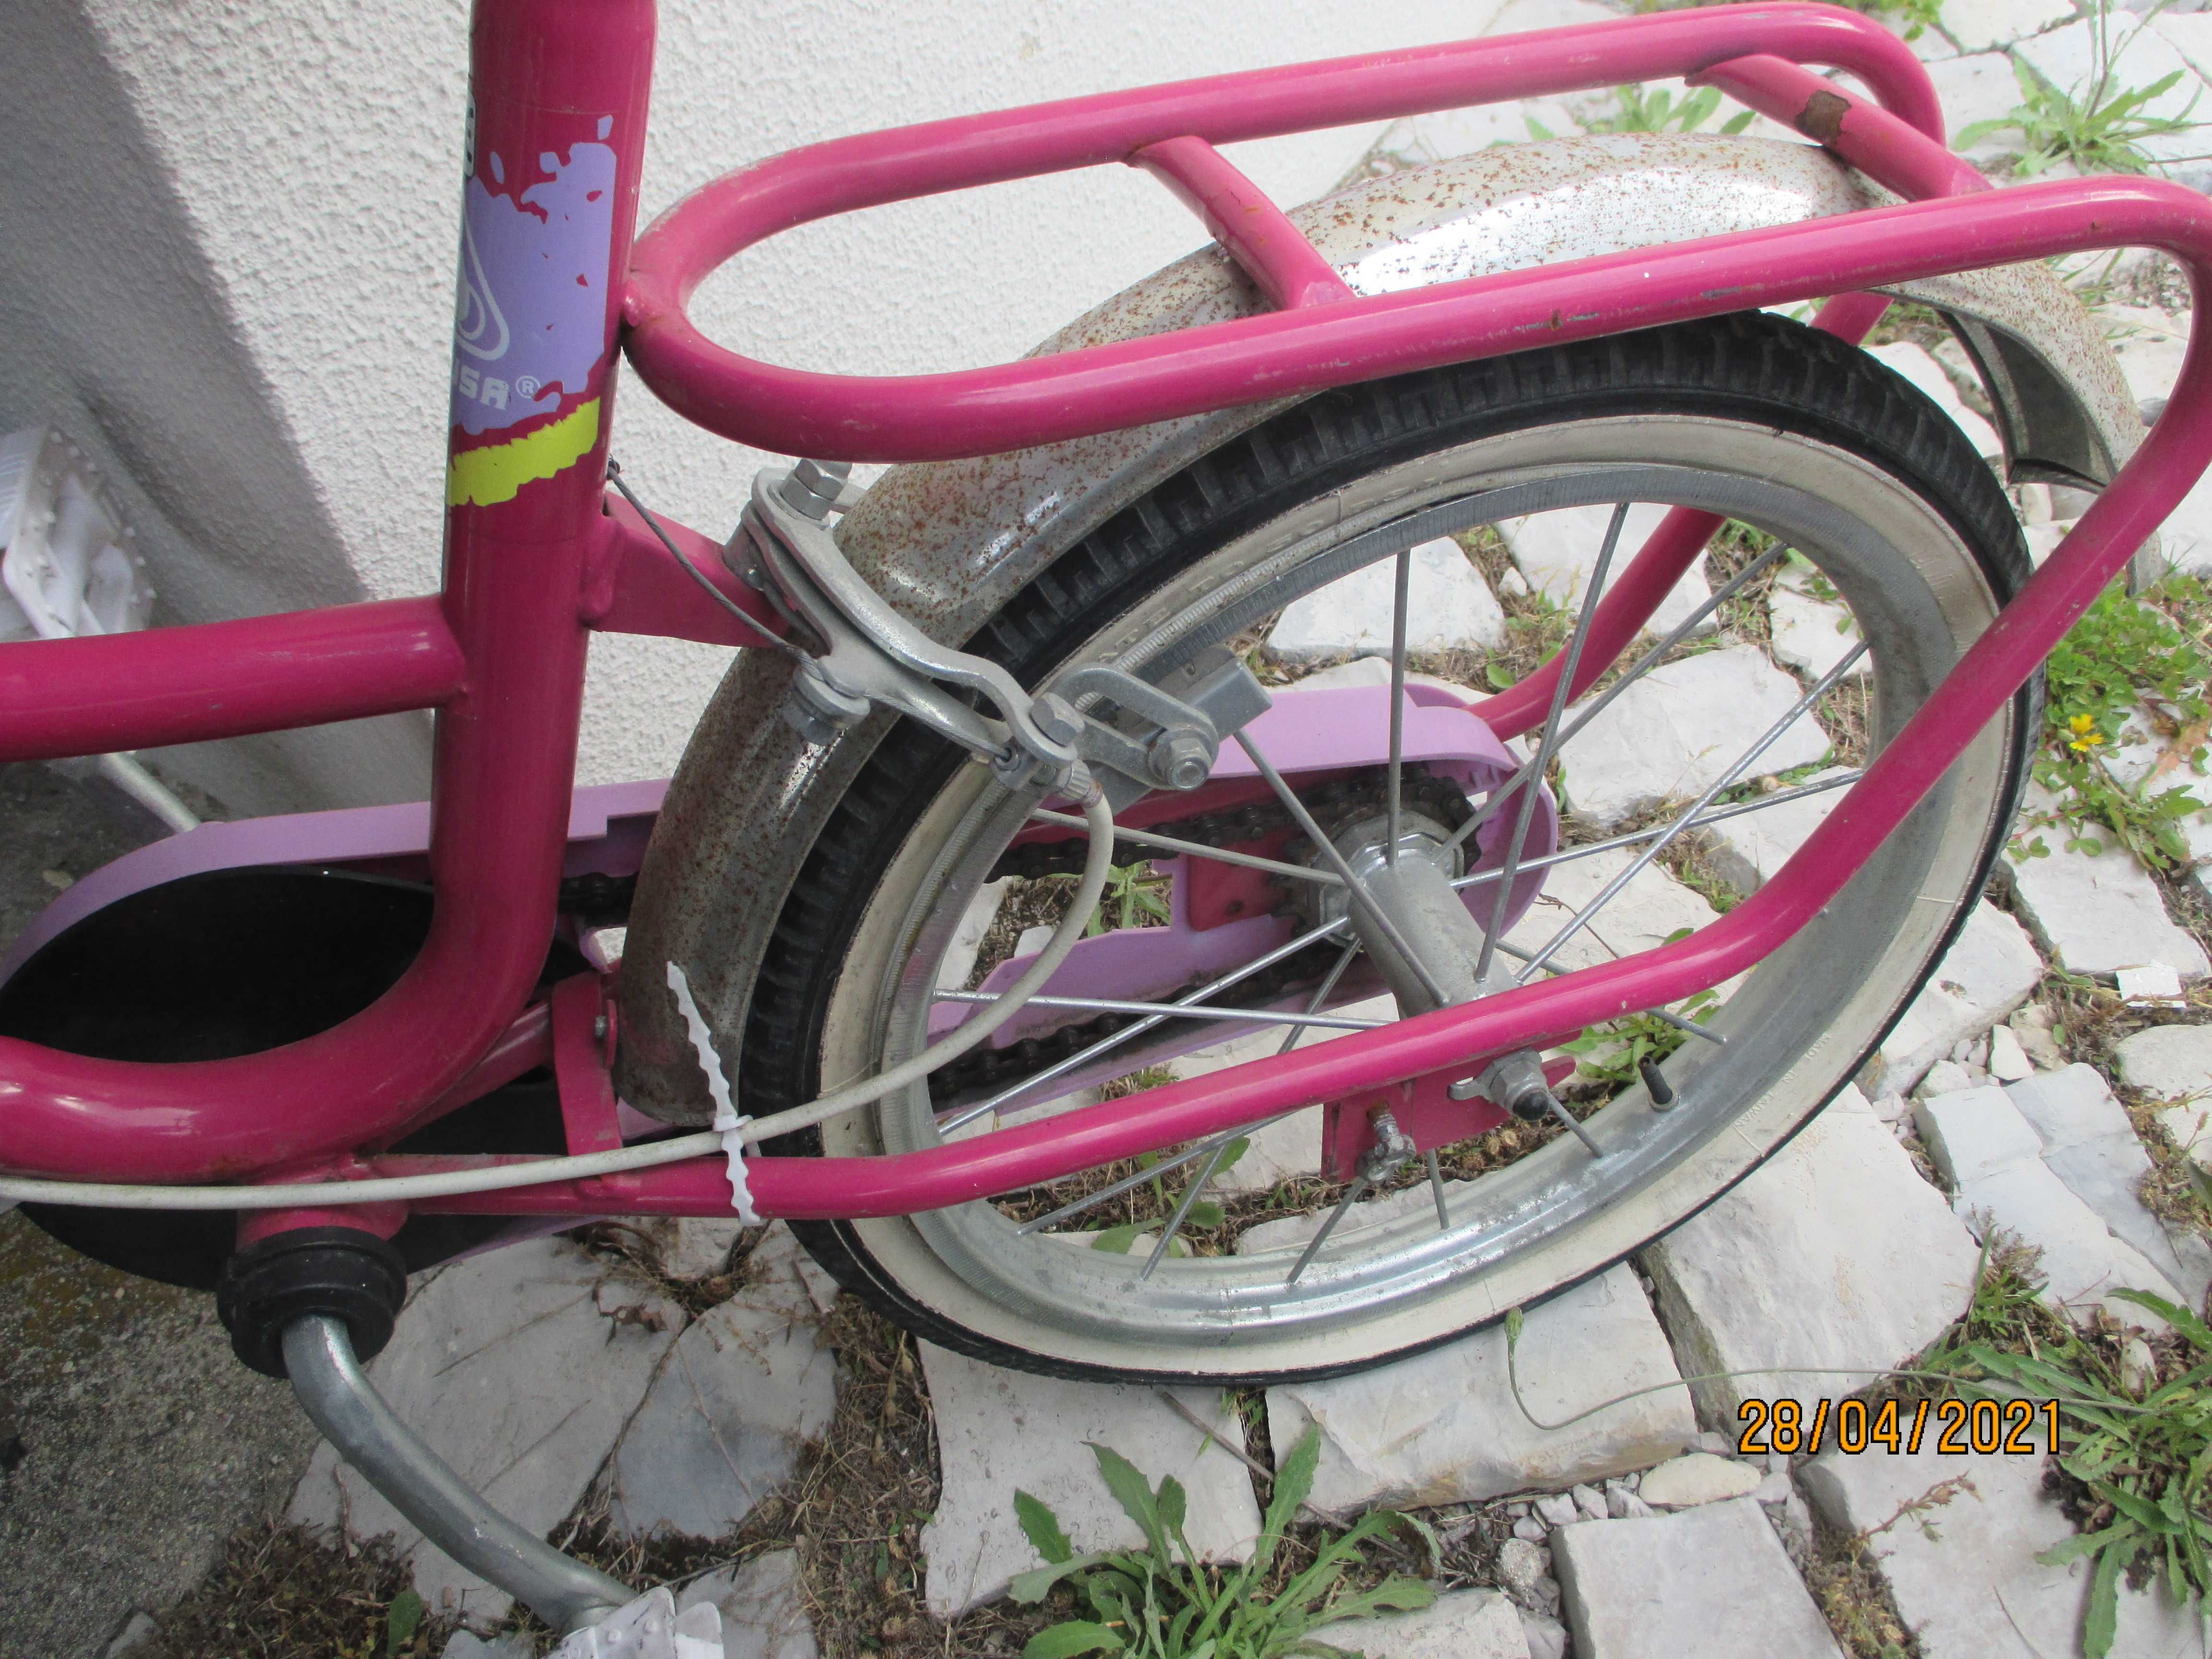 Biciclete para menina roda 16